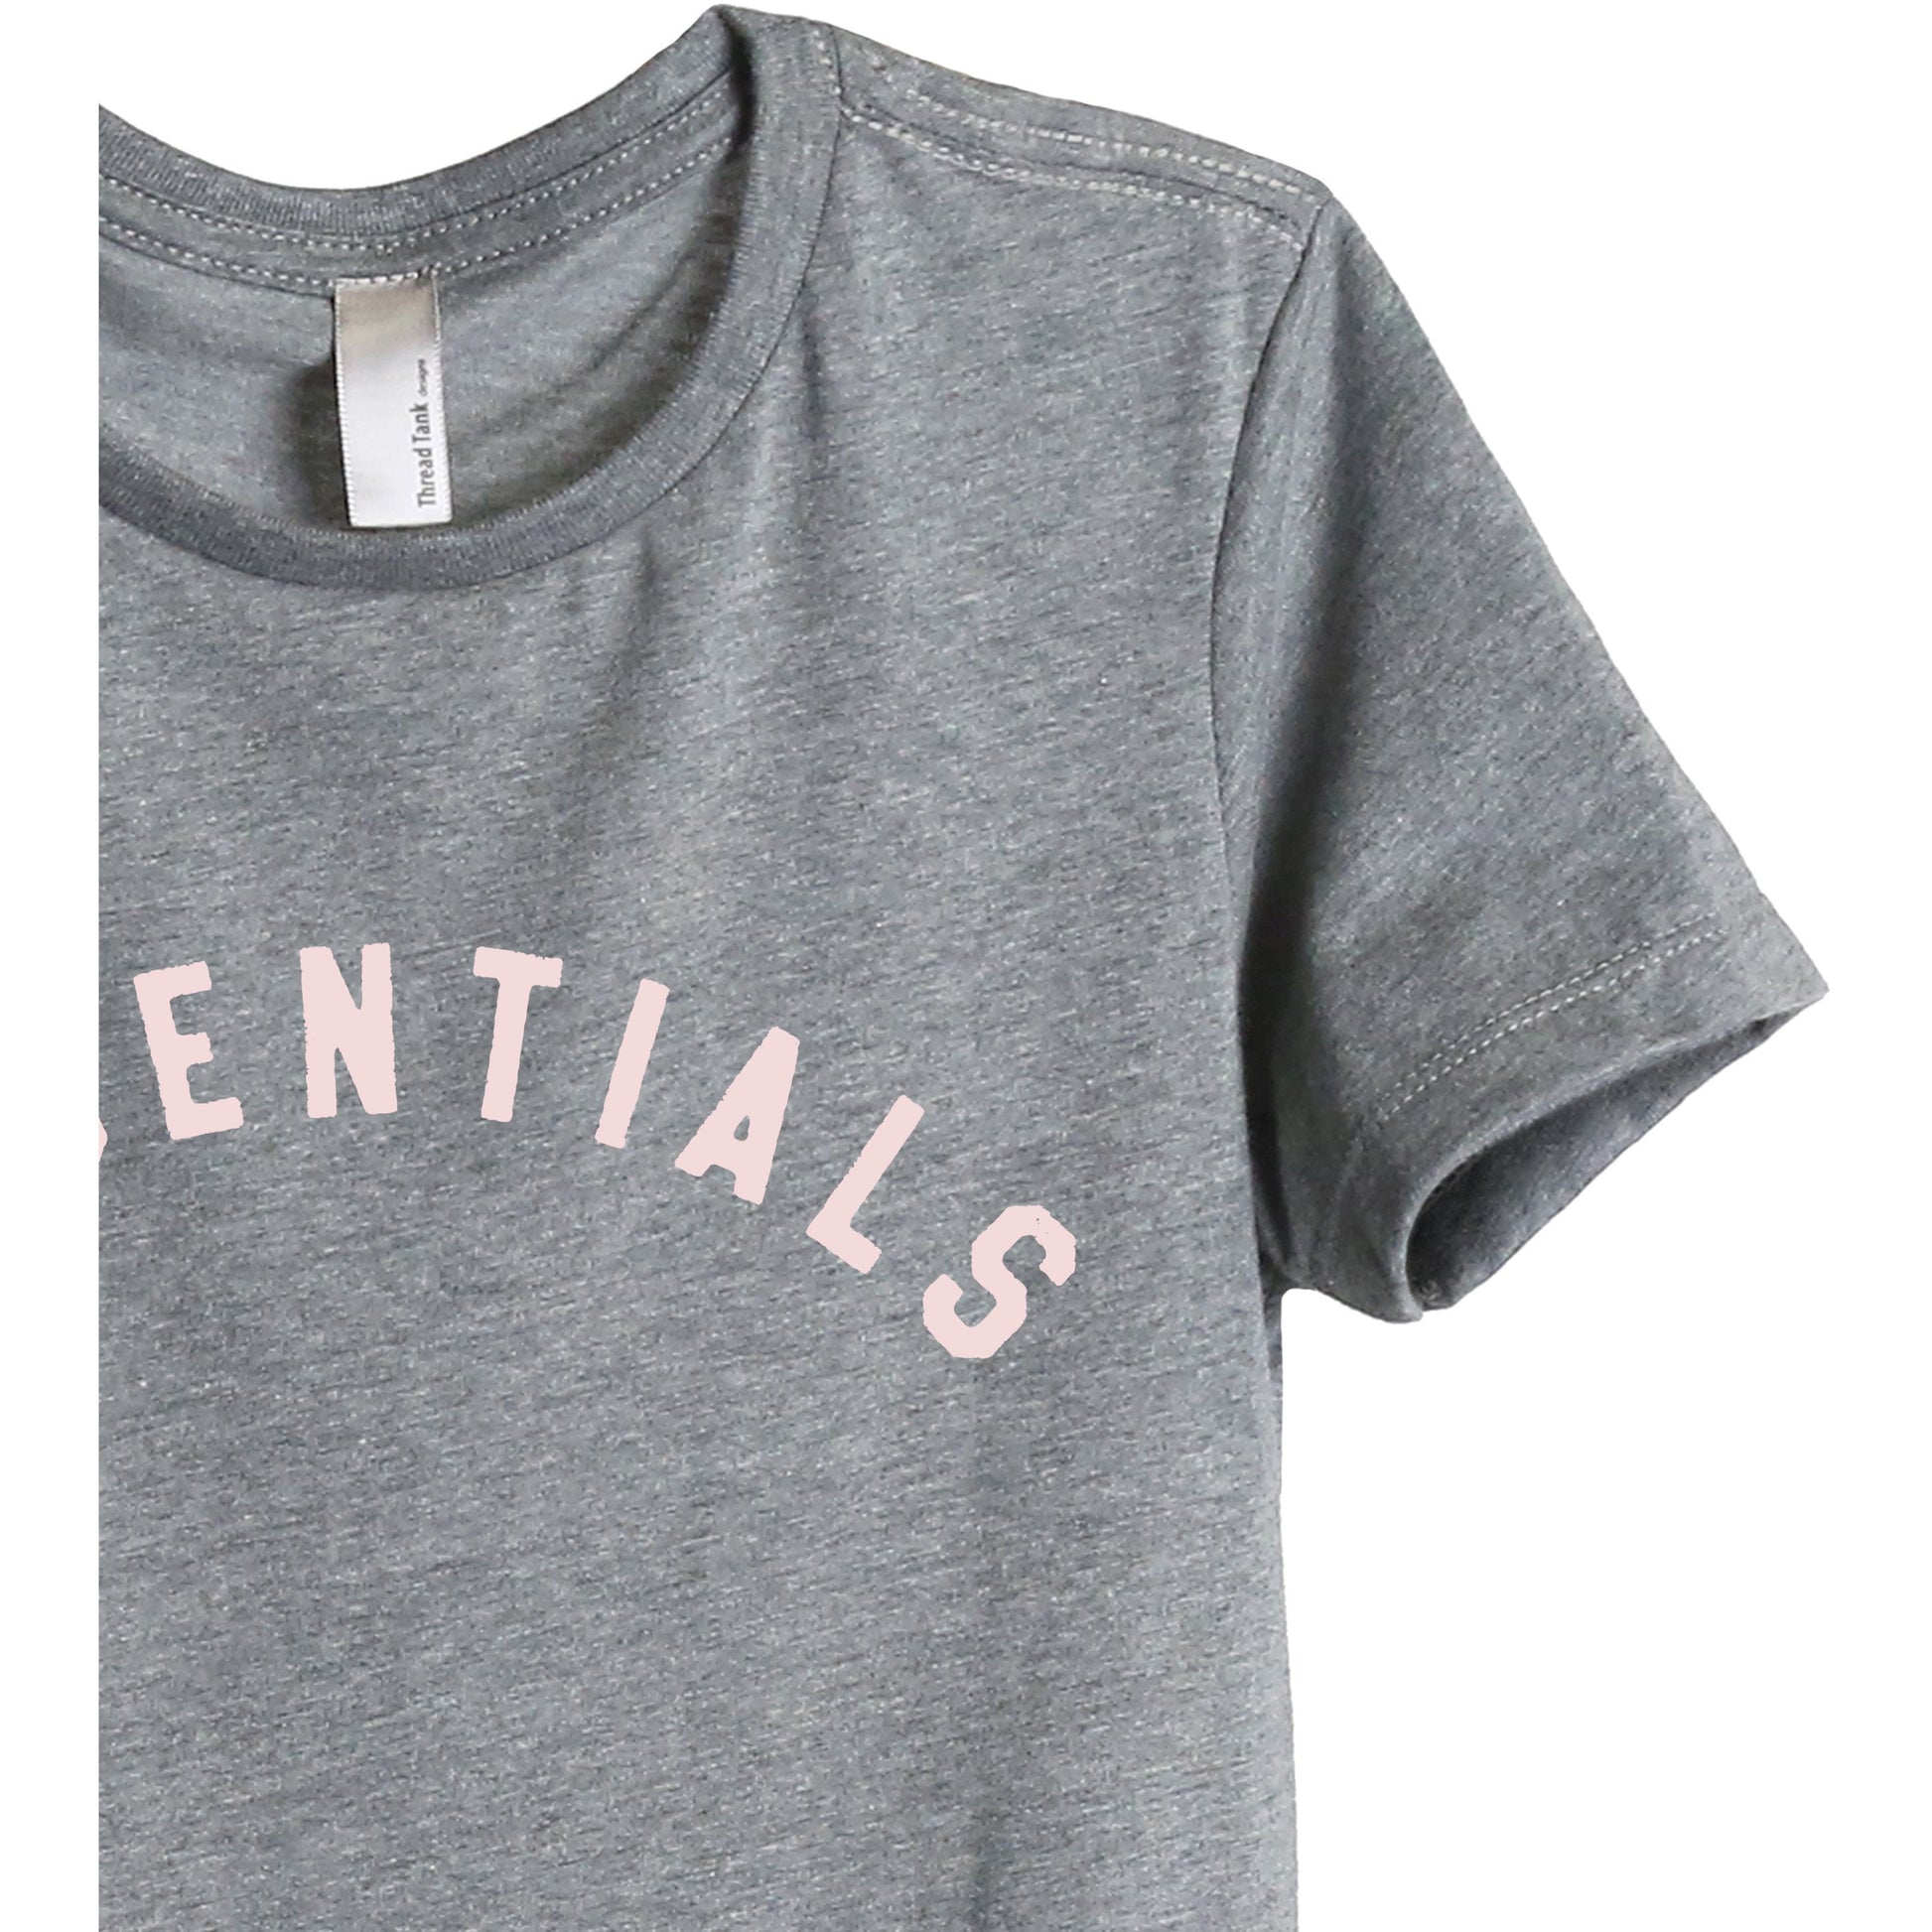 Essentials Women's Relaxed Crewneck T-Shirt Top Tee Heather Grey Zoom Details
